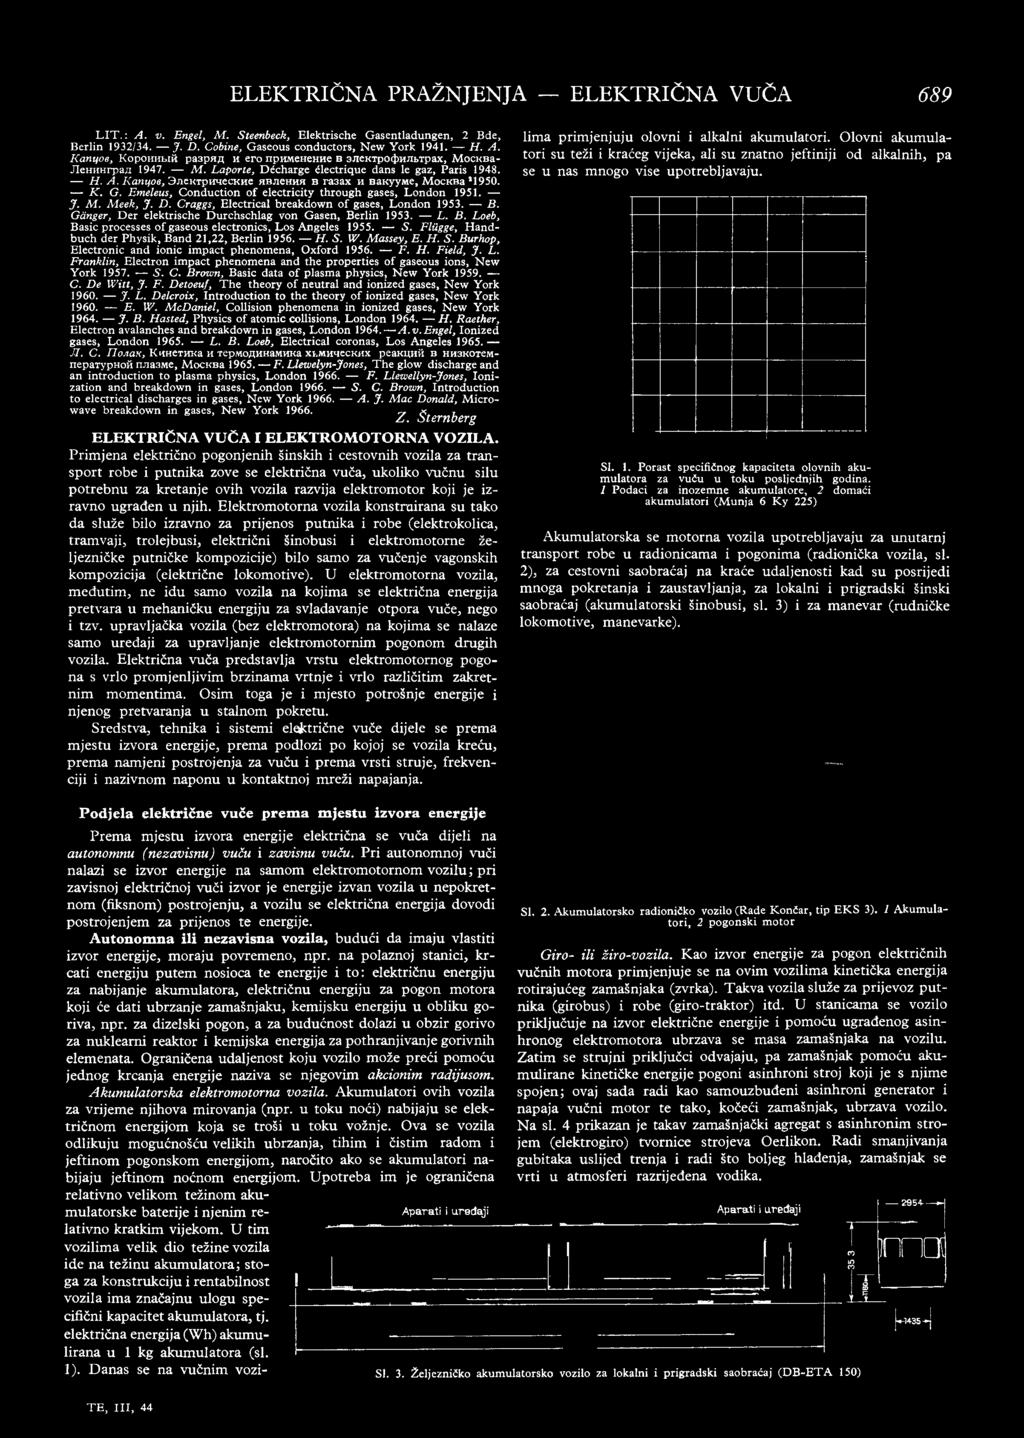 Meek, J. D. Craggs, Electrical breakdown of gases, London 1953. B. Gänger, Der elektrische Durchschlag von Gasen, Berlin 1953. L. В. Loeb, Basic processes of gaseous electronics, Los Angeles 1955. S.